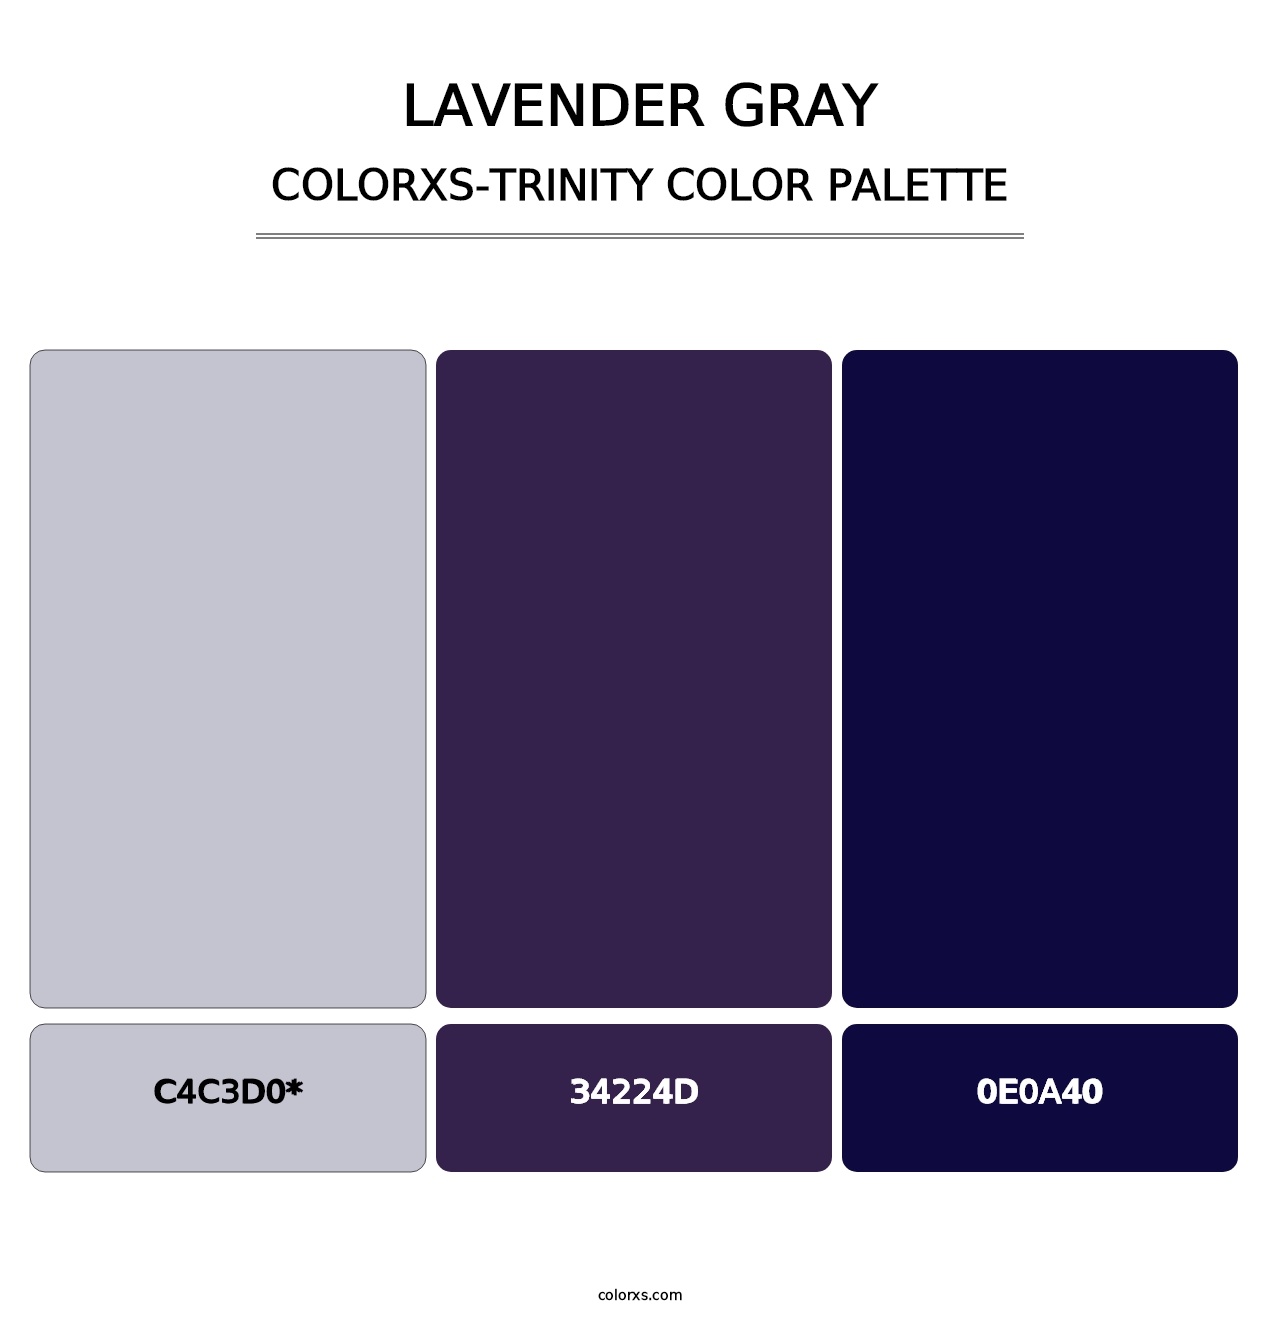 Lavender Gray - Colorxs Trinity Palette